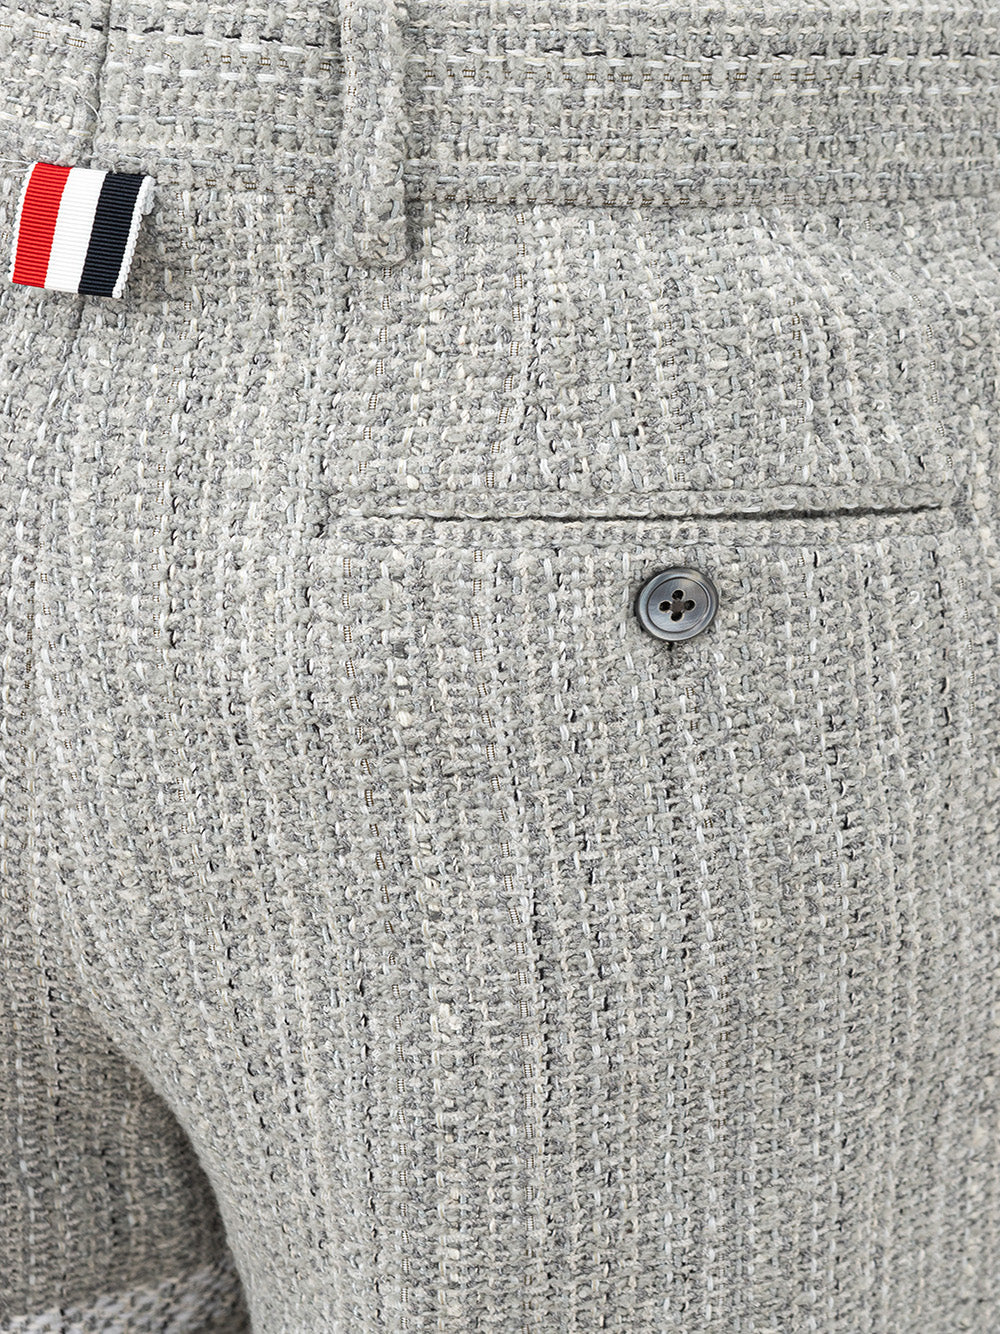 Thom Browne Grey Tweed Trousers - DEA STILOSA MILANO